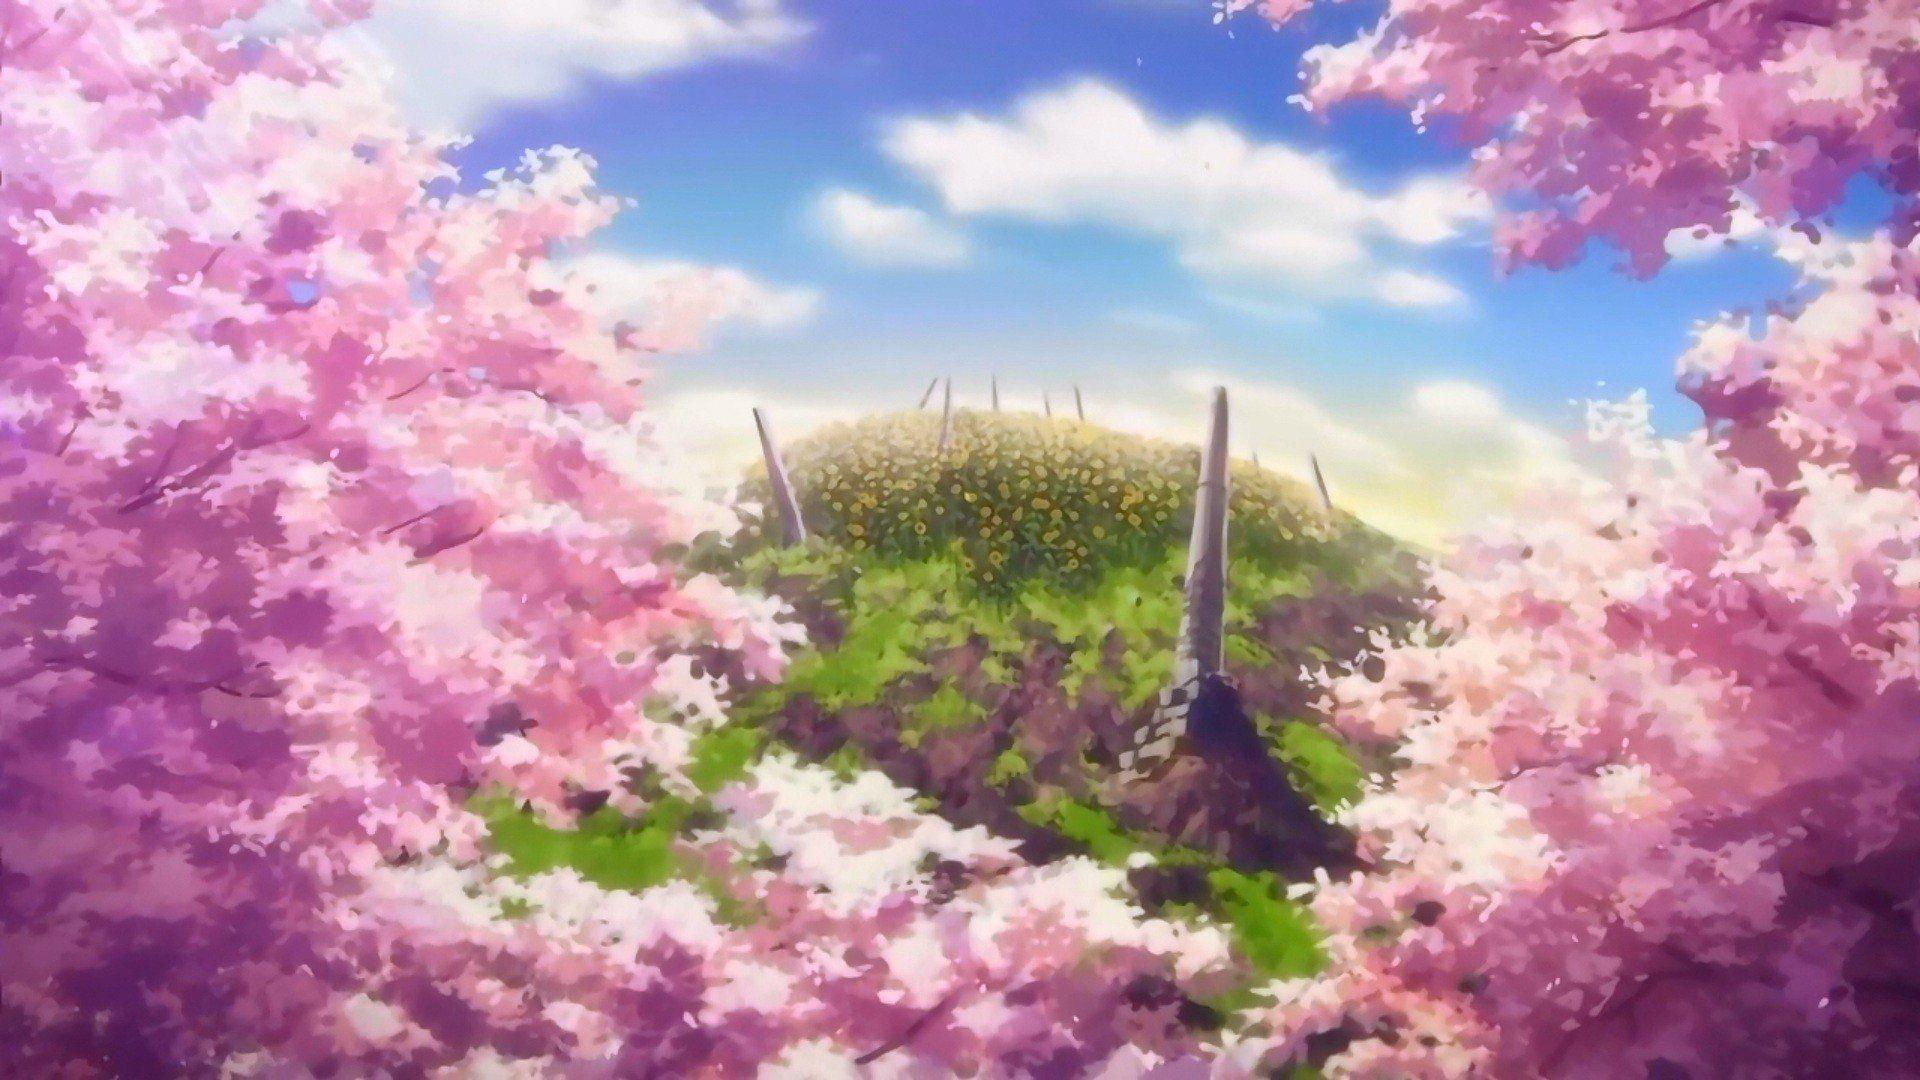 Anime Cherry Blossom Tree wallpaper in 2560x1440 resolution